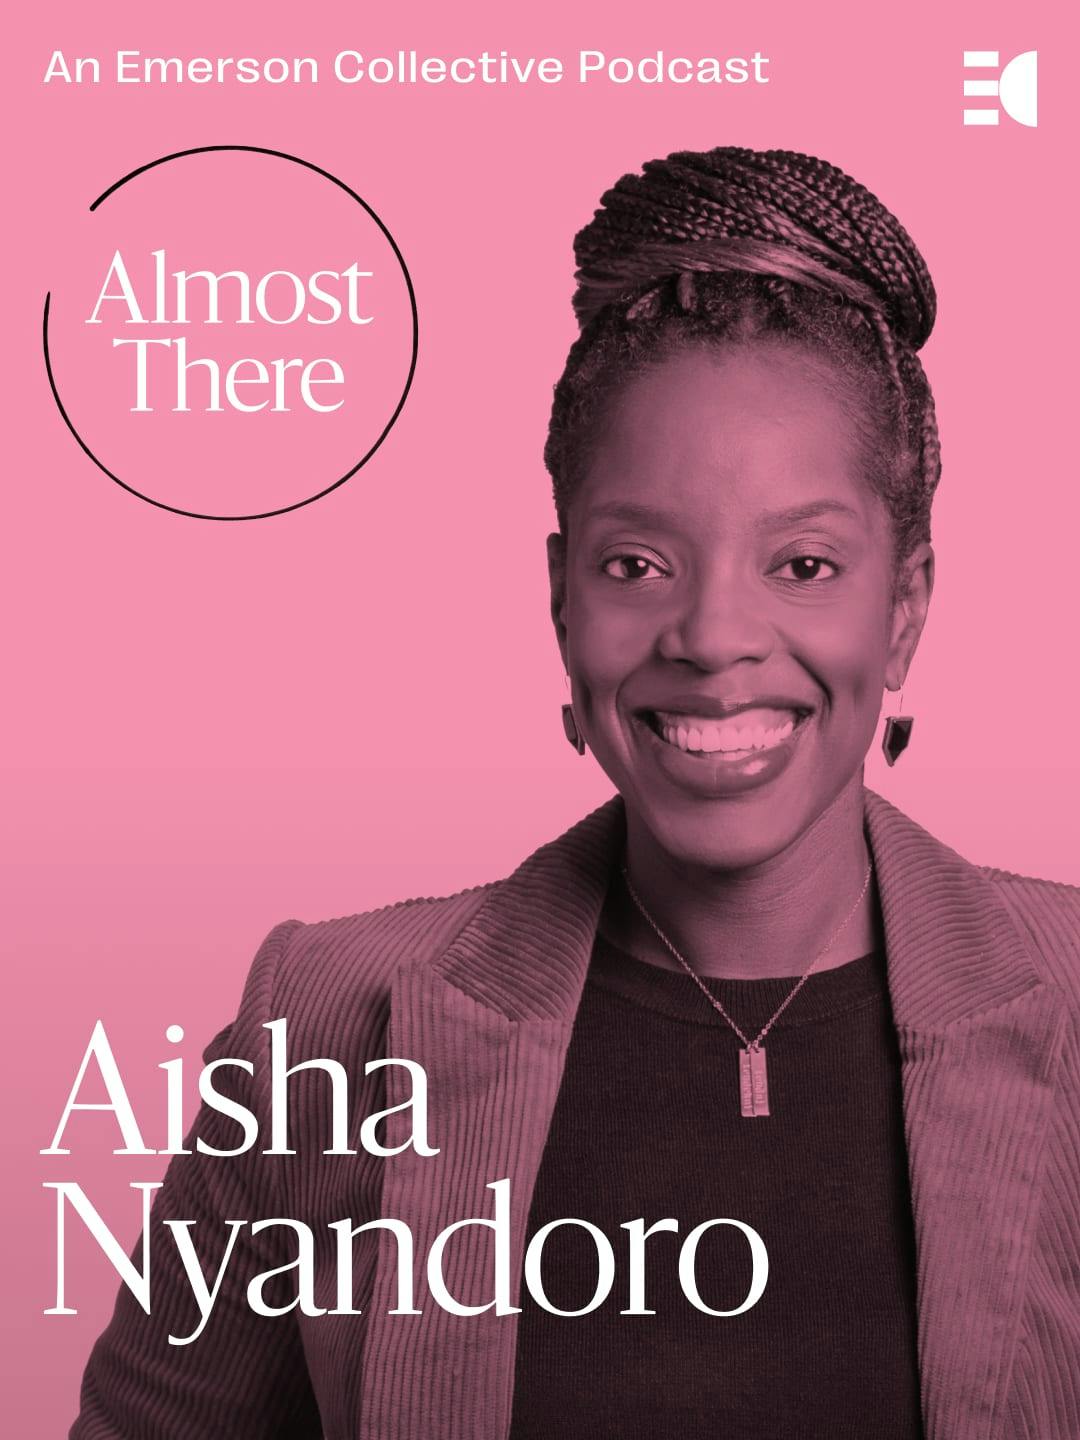 Image of Aisha Nyandoro